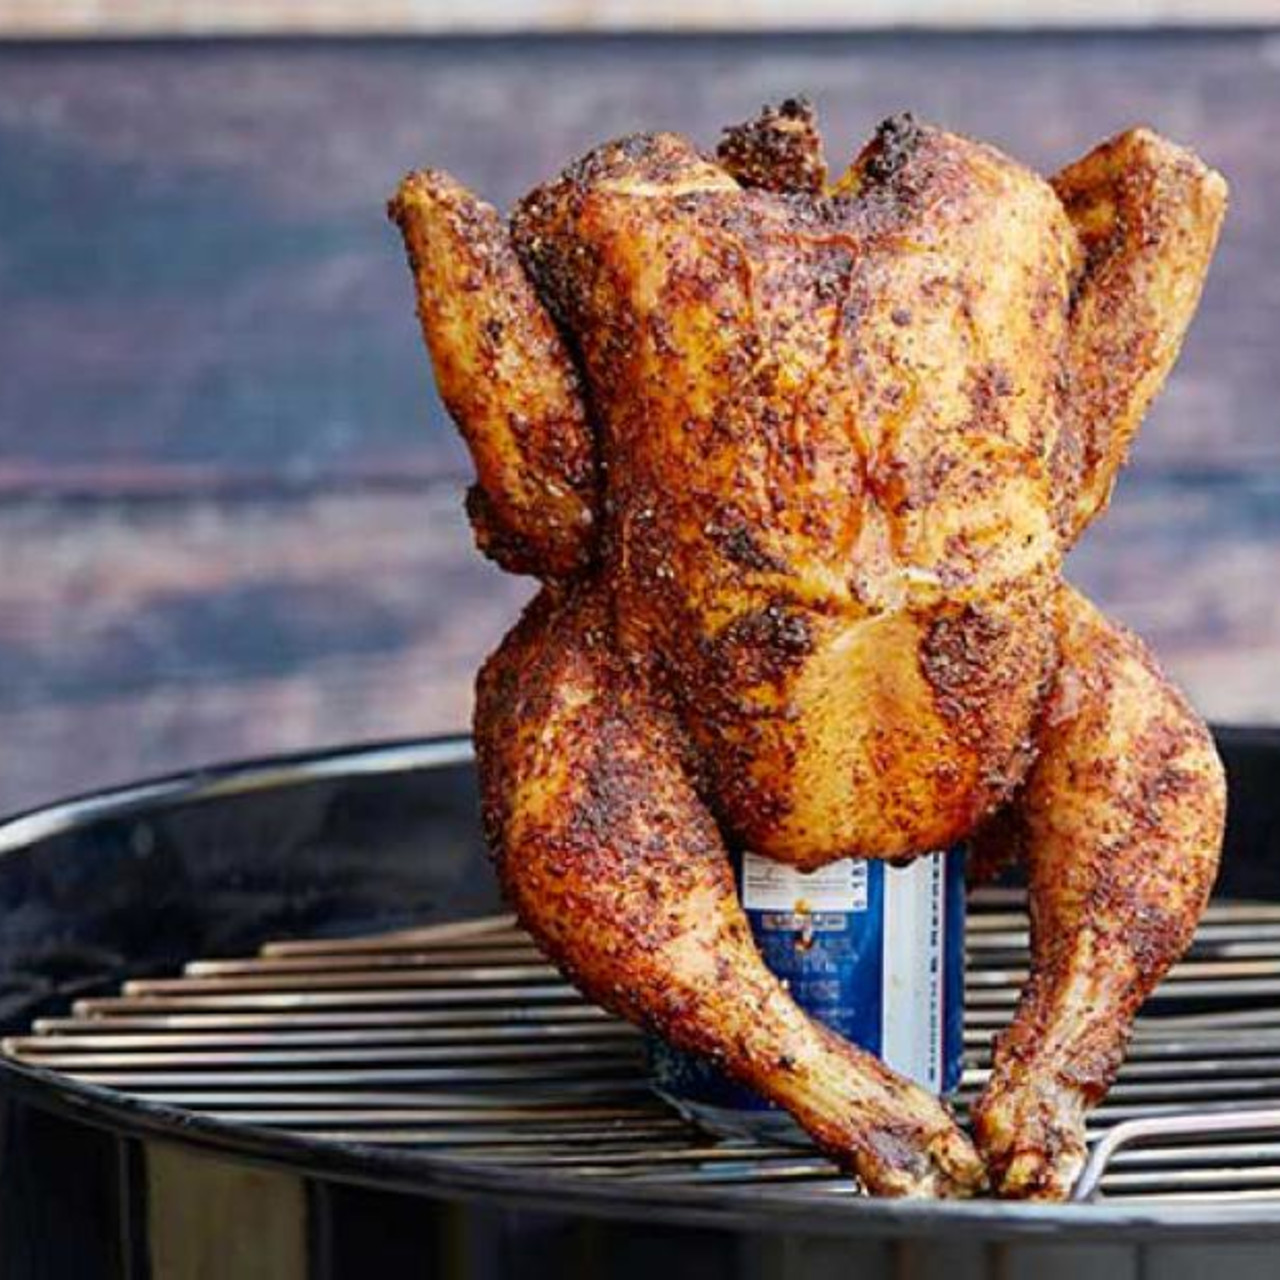 Masterbuilt Air Fryer Recipes Healthy Dinner Beer Can Chicken